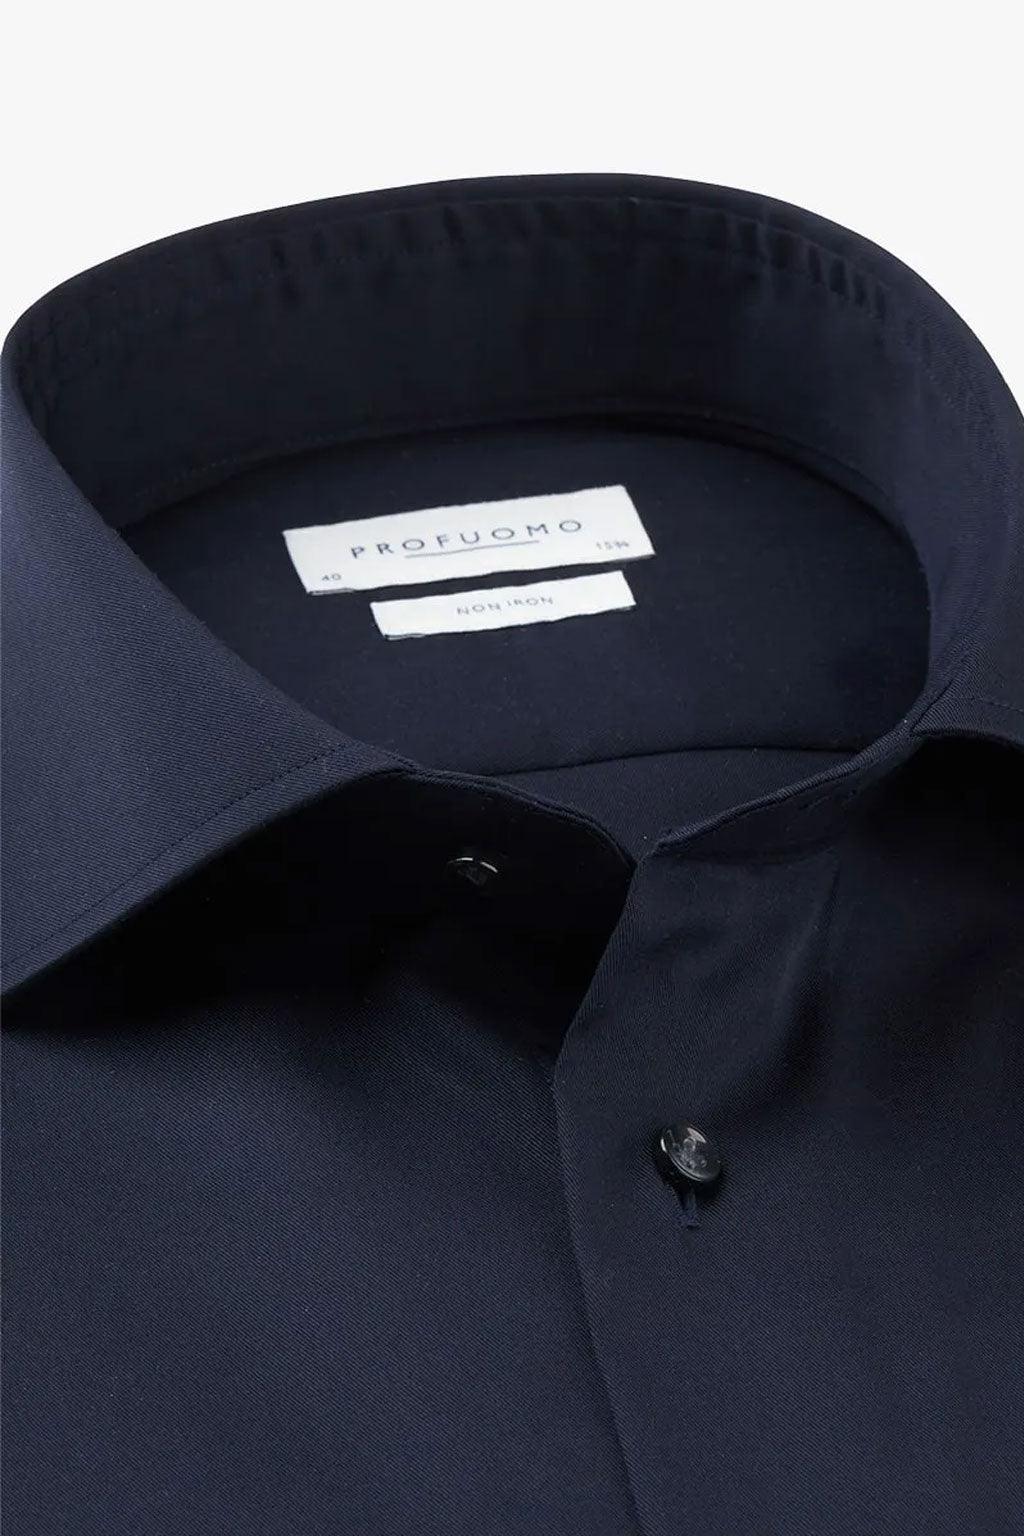 Profuomo overhemd lange mouw - Big Boss | the menswear concept